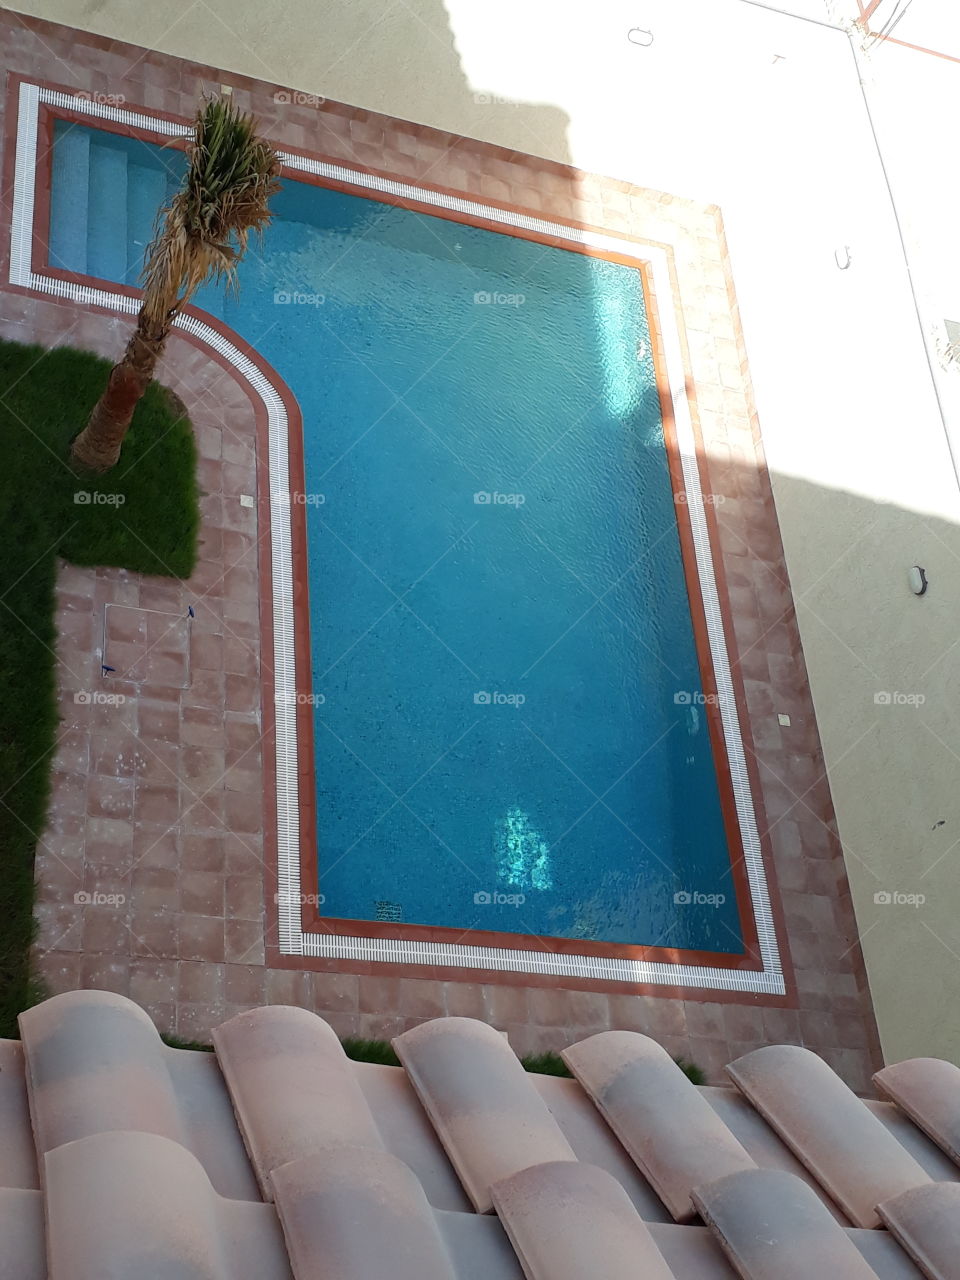 swimming pool